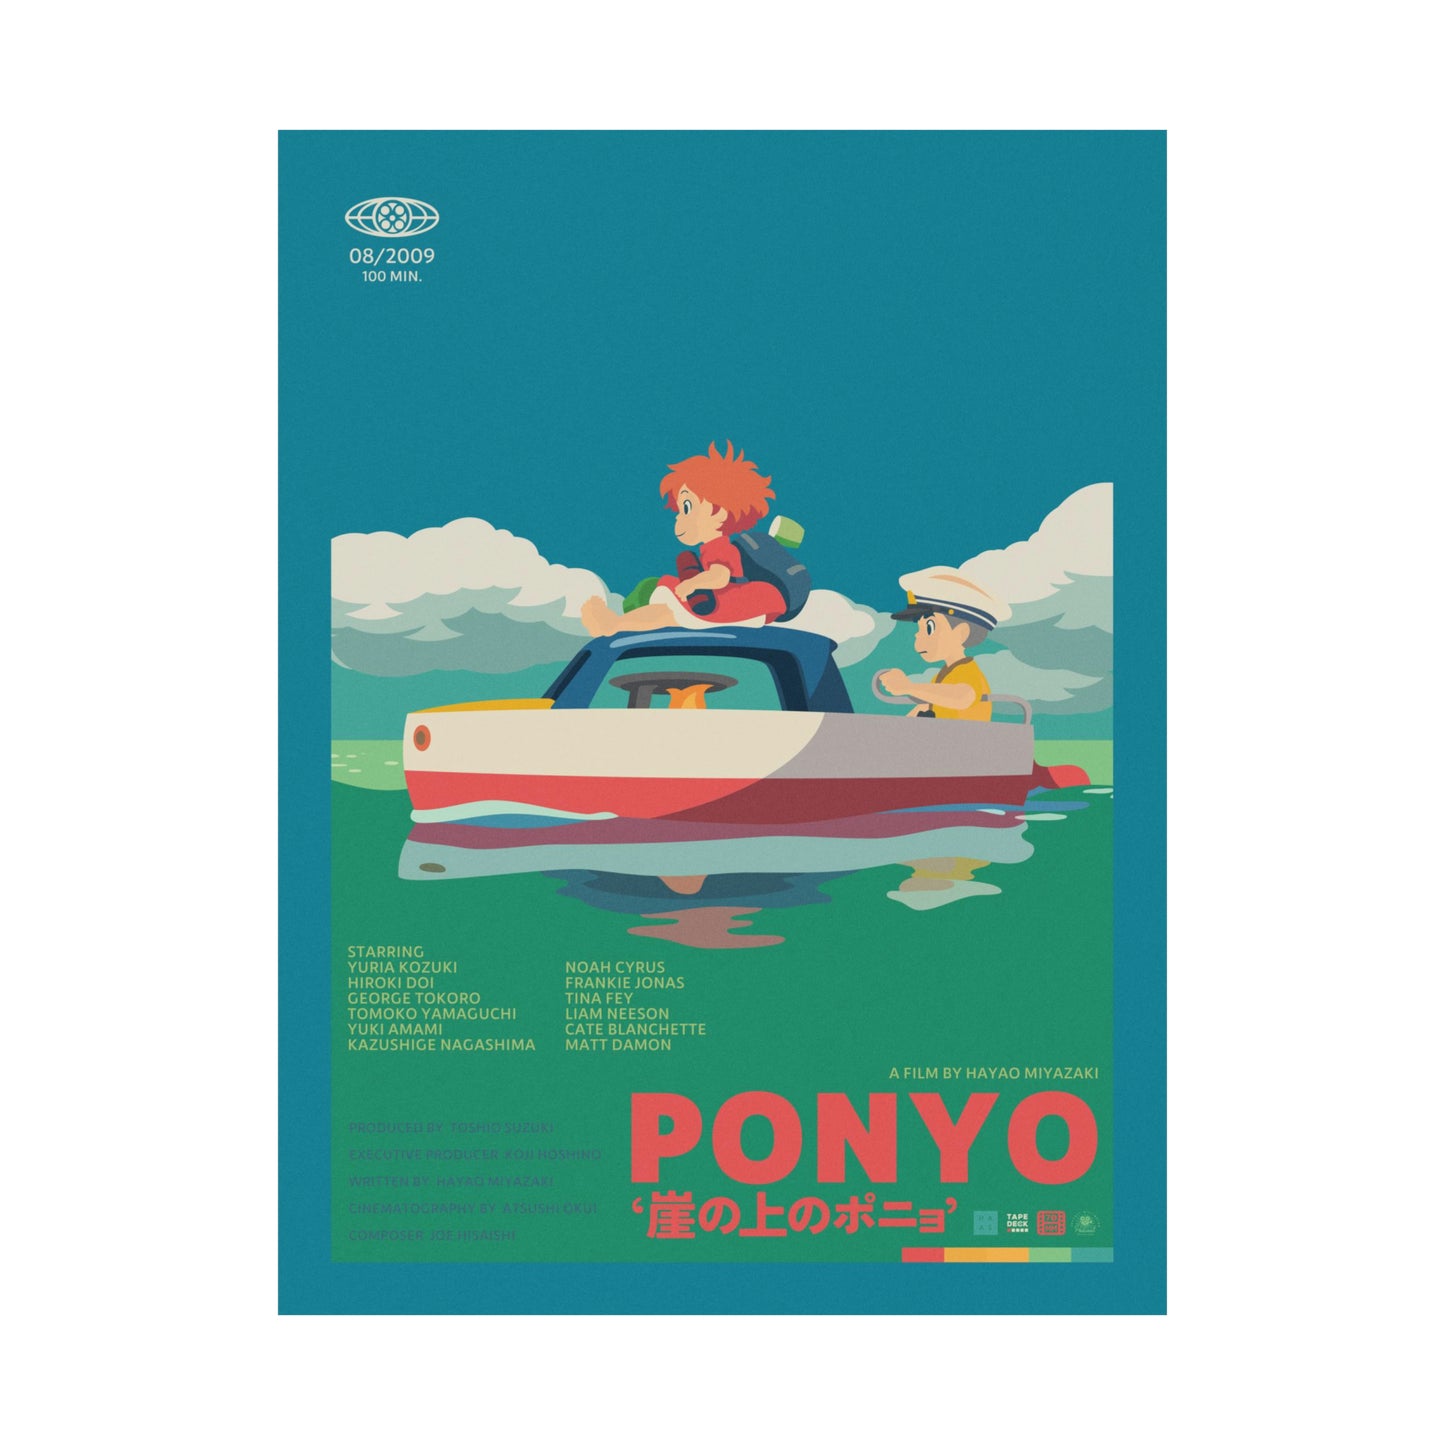 Bonus Episode: Ponyo